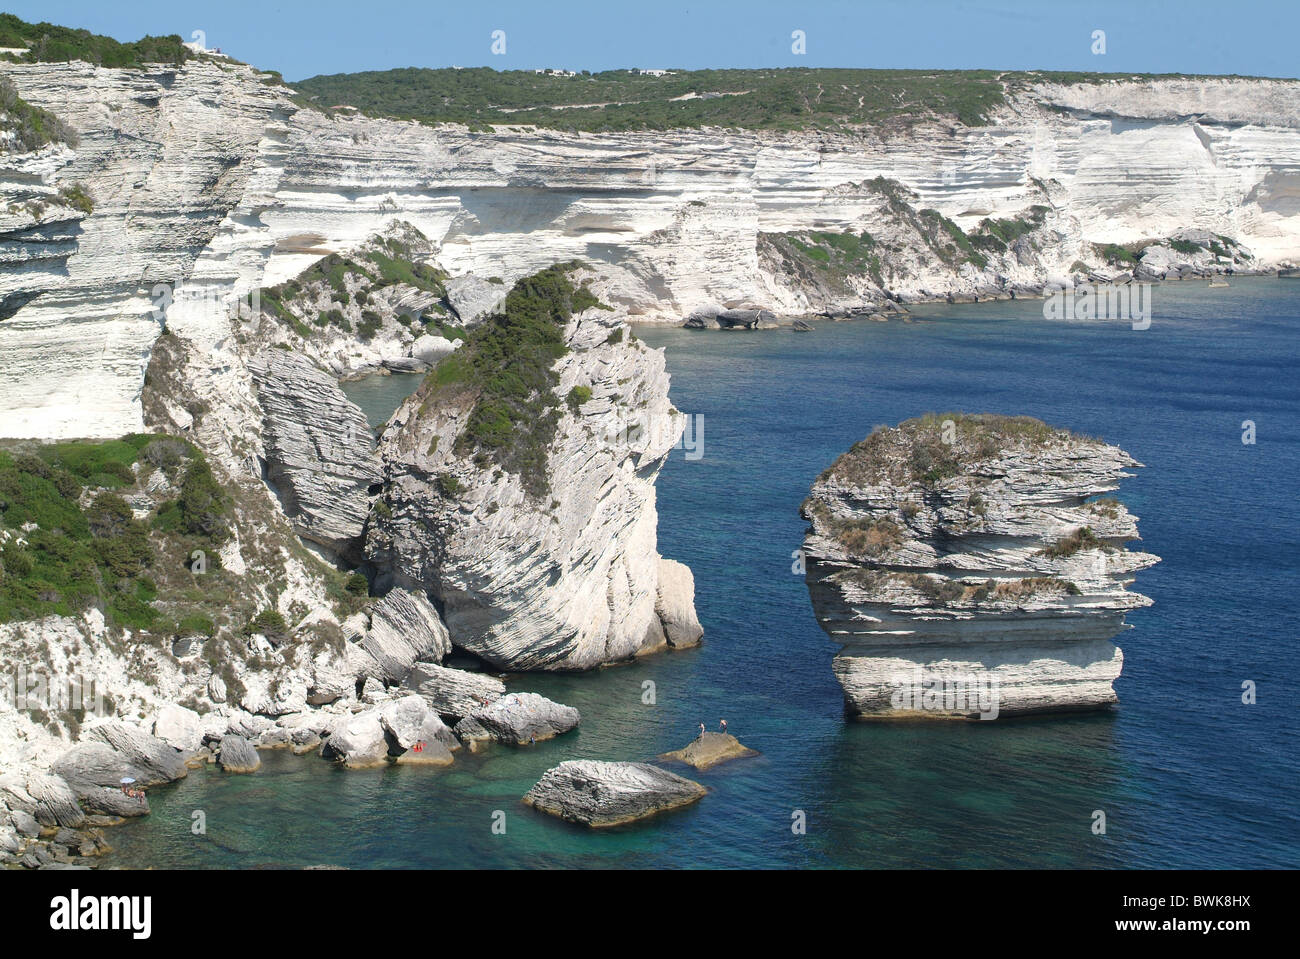 Landschaft-Landschaft Korsika Le Grain de Sable in der Nähe von Bonifacio Küste Klippen weißen Kalk Felsen Felsen Erosion zwei- Stockfoto